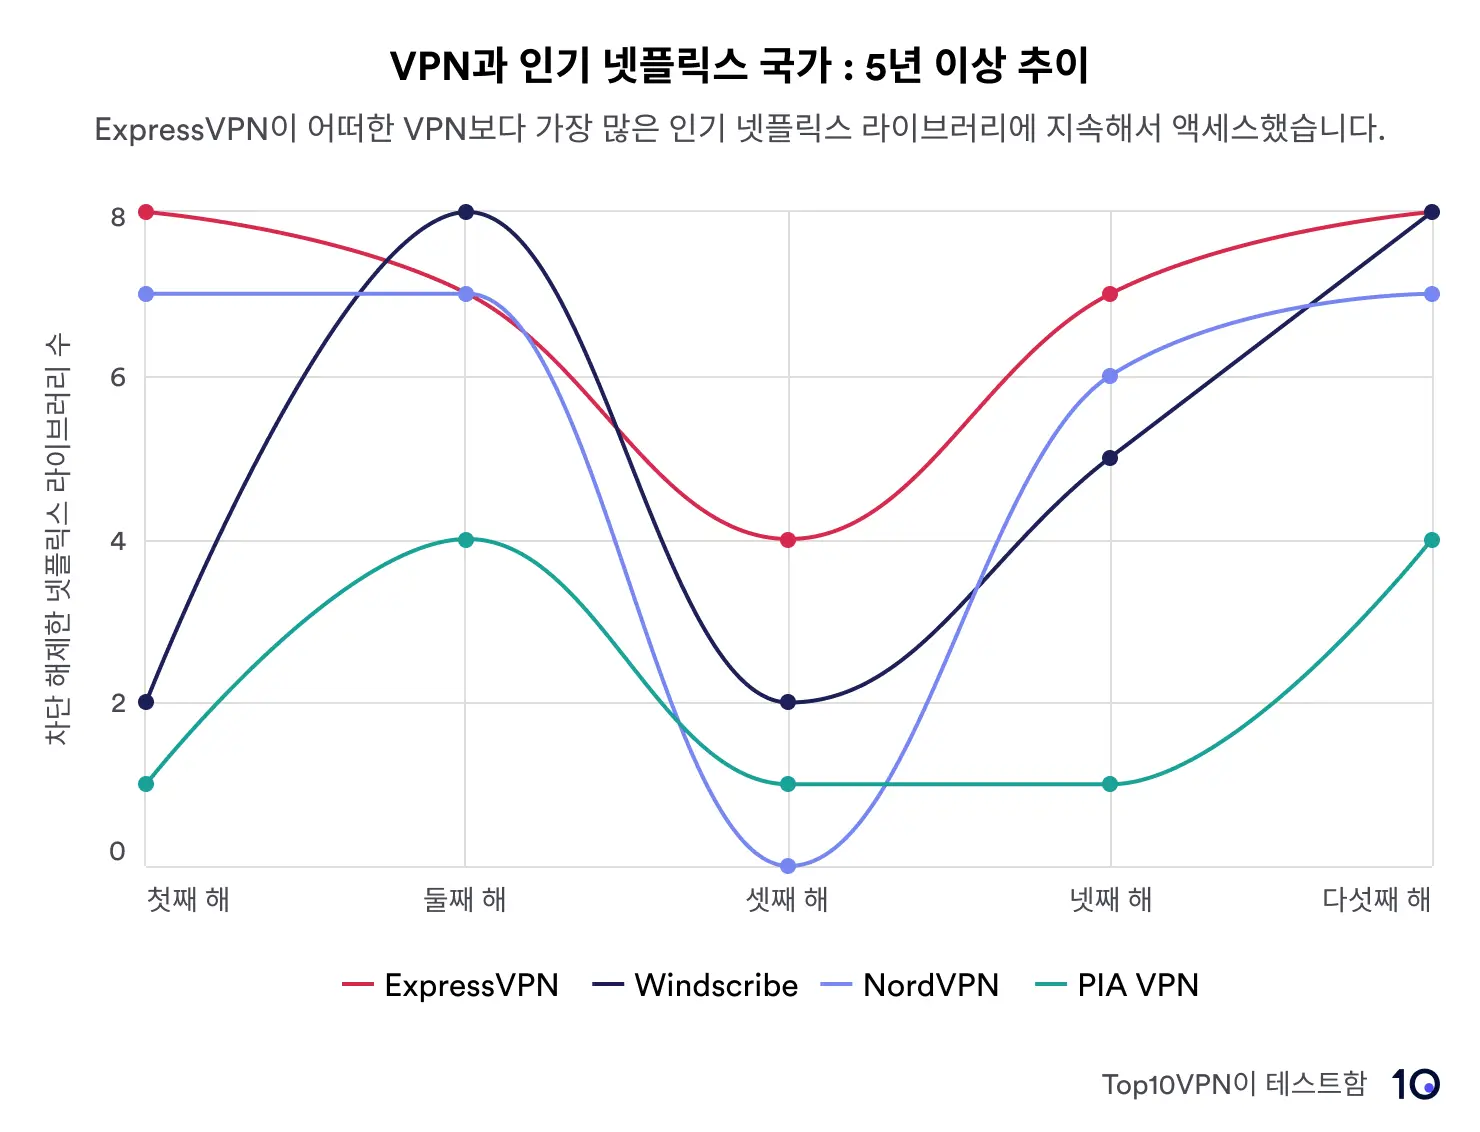 A5년 동안 Netflix 지역 차단을 해제한 4개 VPN(ExpressVPN, Windscribe, NordVPN, PIA VPN)의 성능을 보여주는 선 그래프. ExpressVPN은 안정성을 선도합니다.